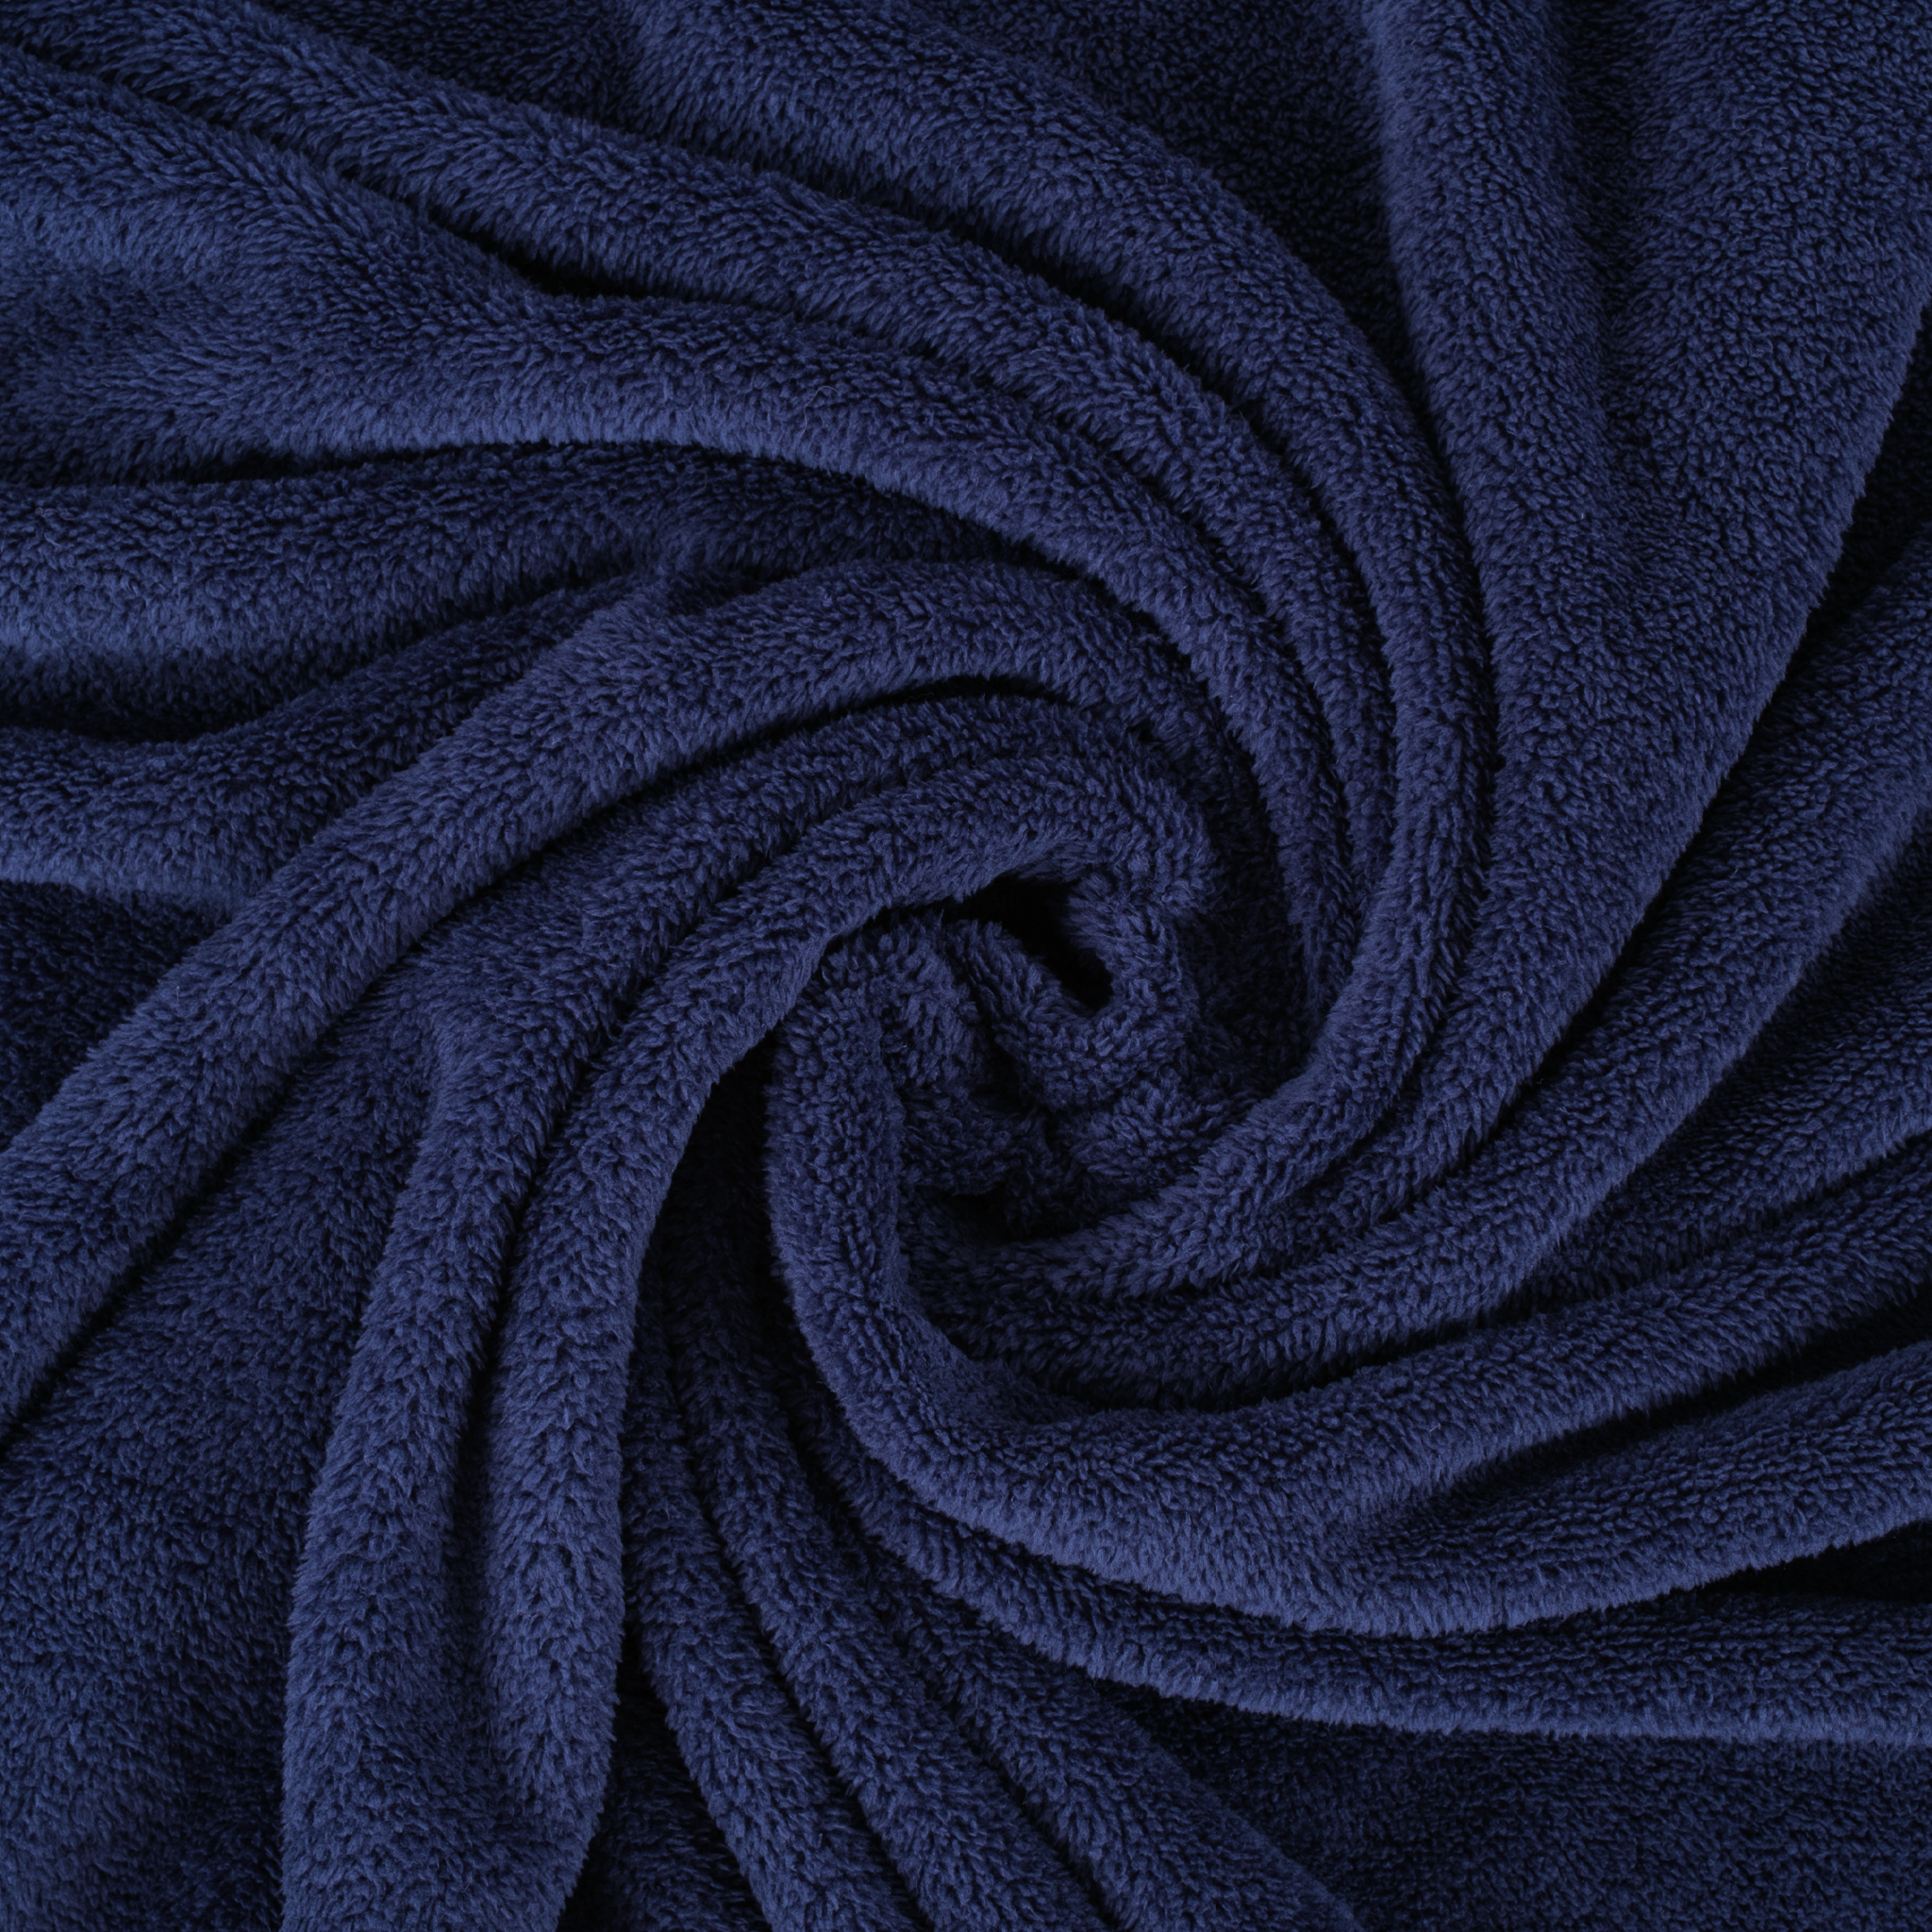 American Soft Linen - Bedding Fleece Blanket - Throw Size 50x60 inches - Navy-Blue - 5